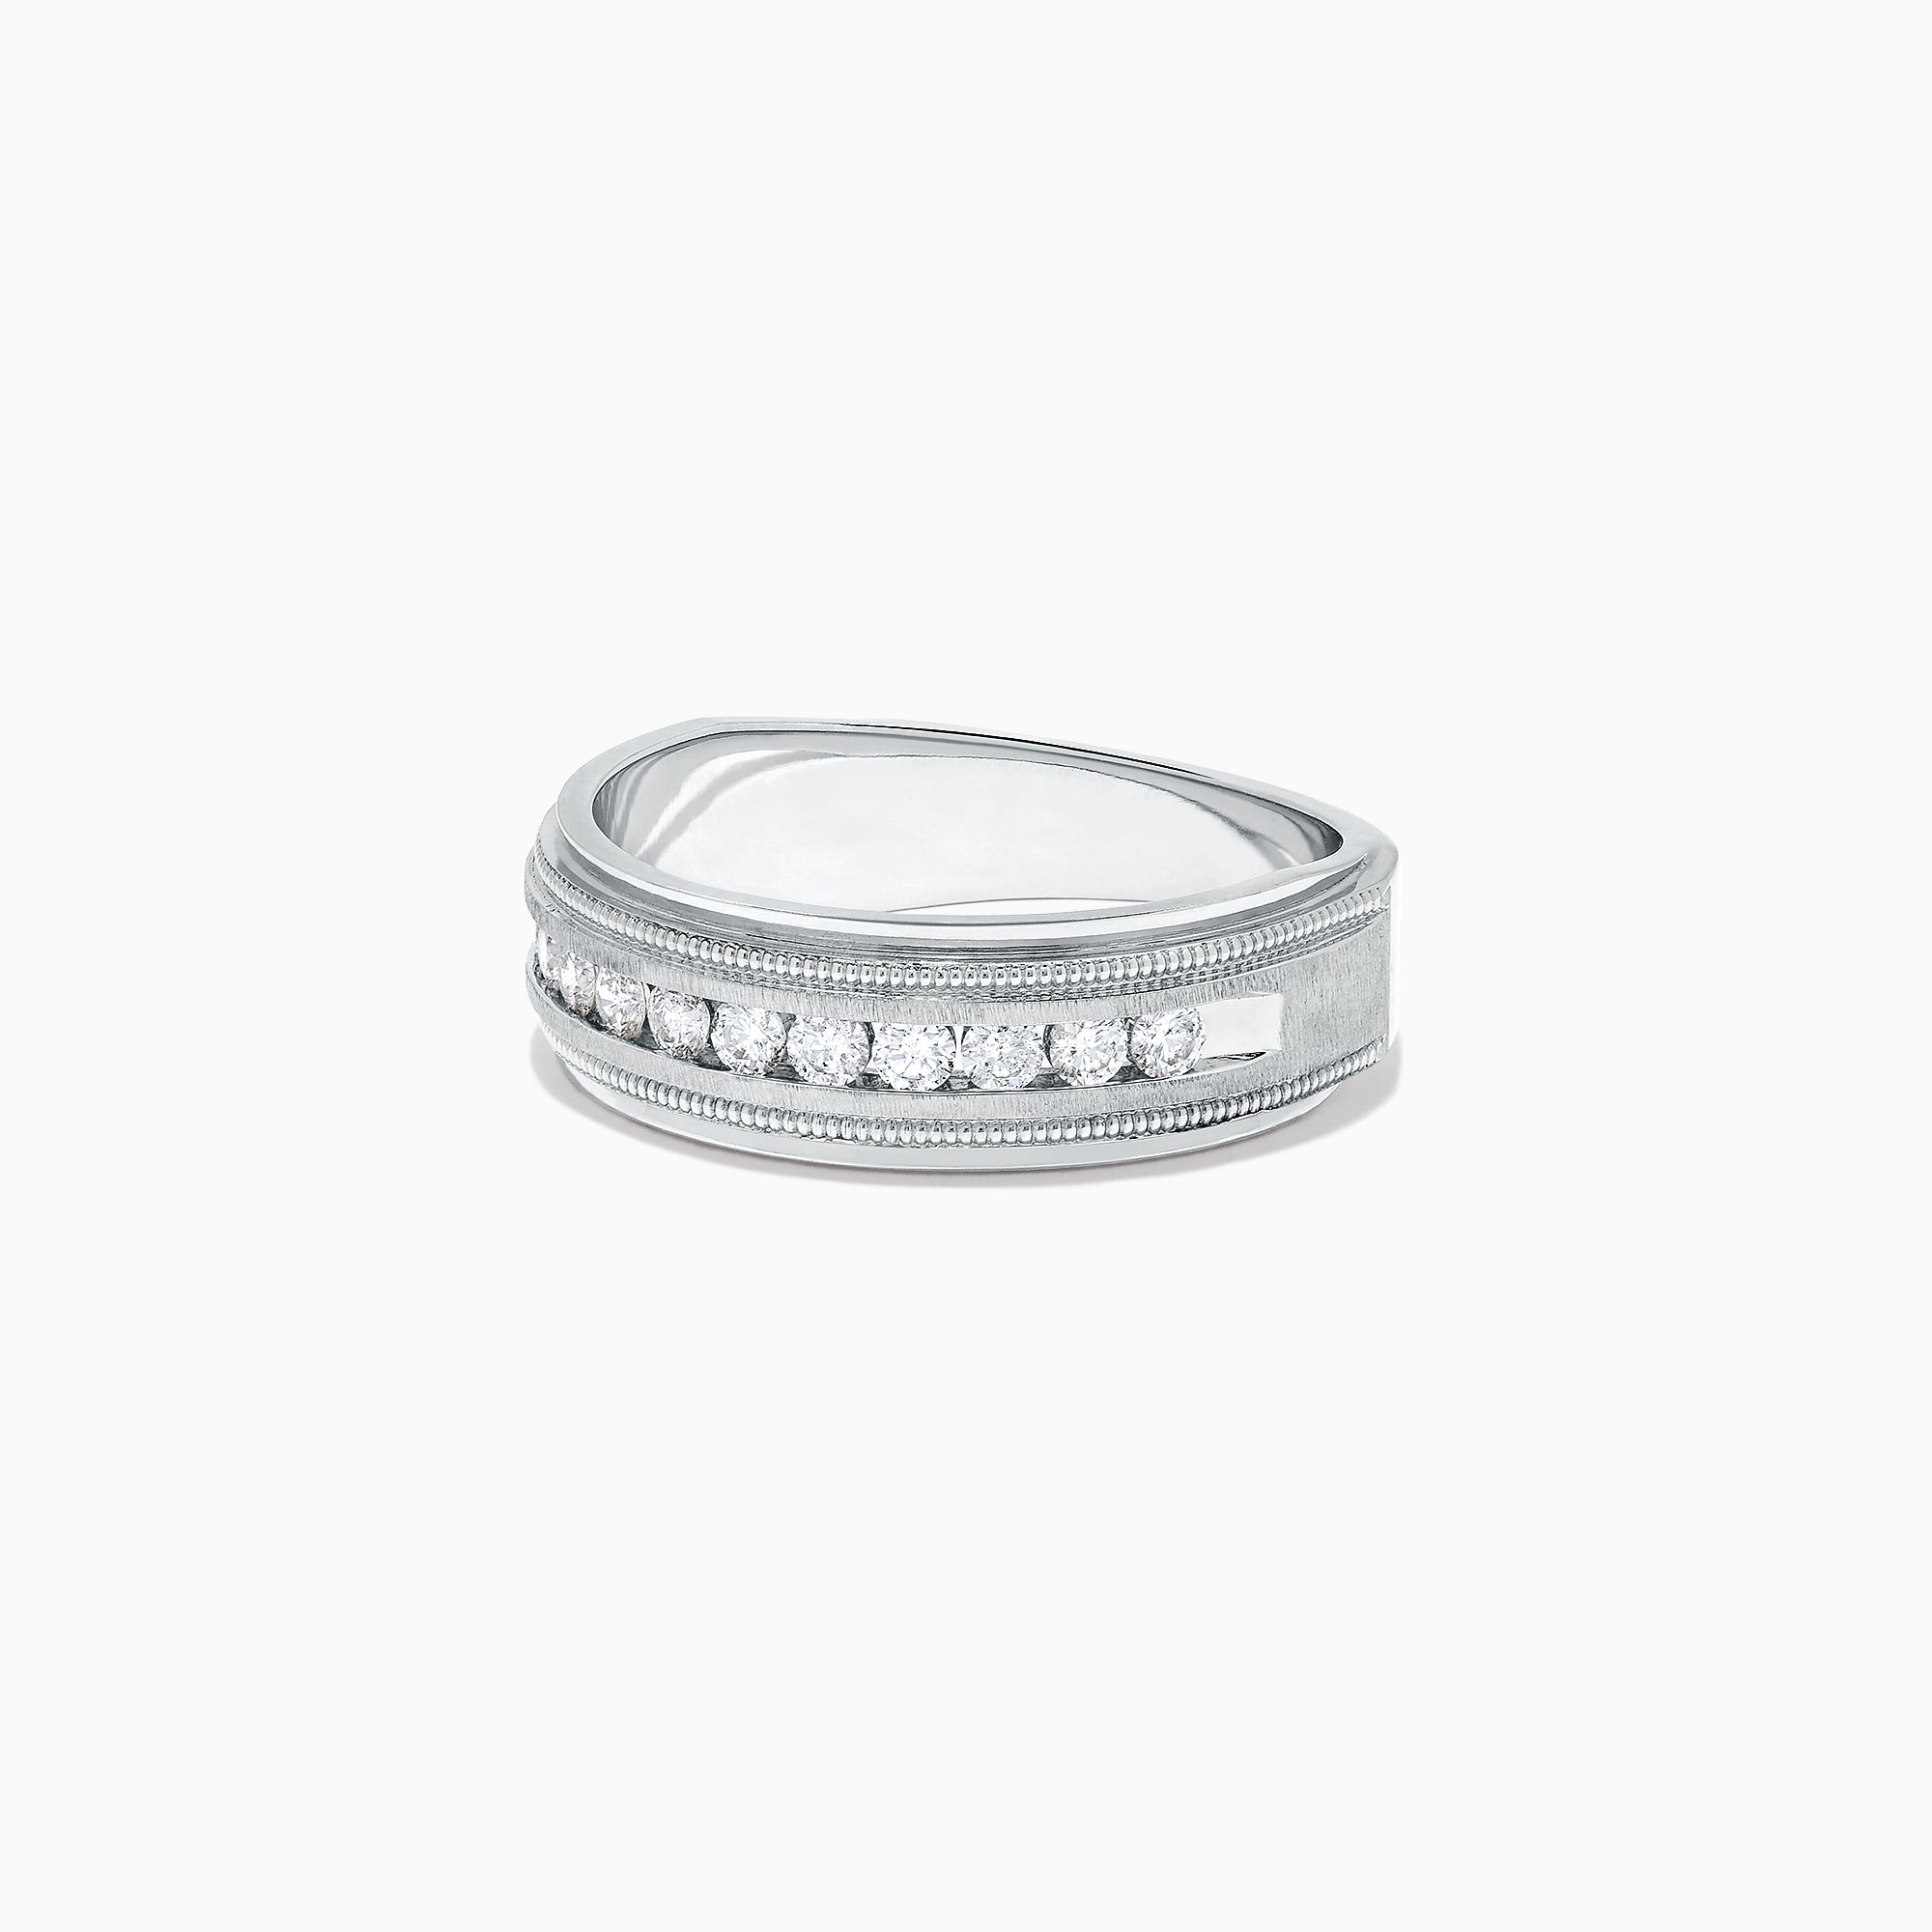 Effy Men's 14K White Gold Diamond Ring, 0.47 TCW